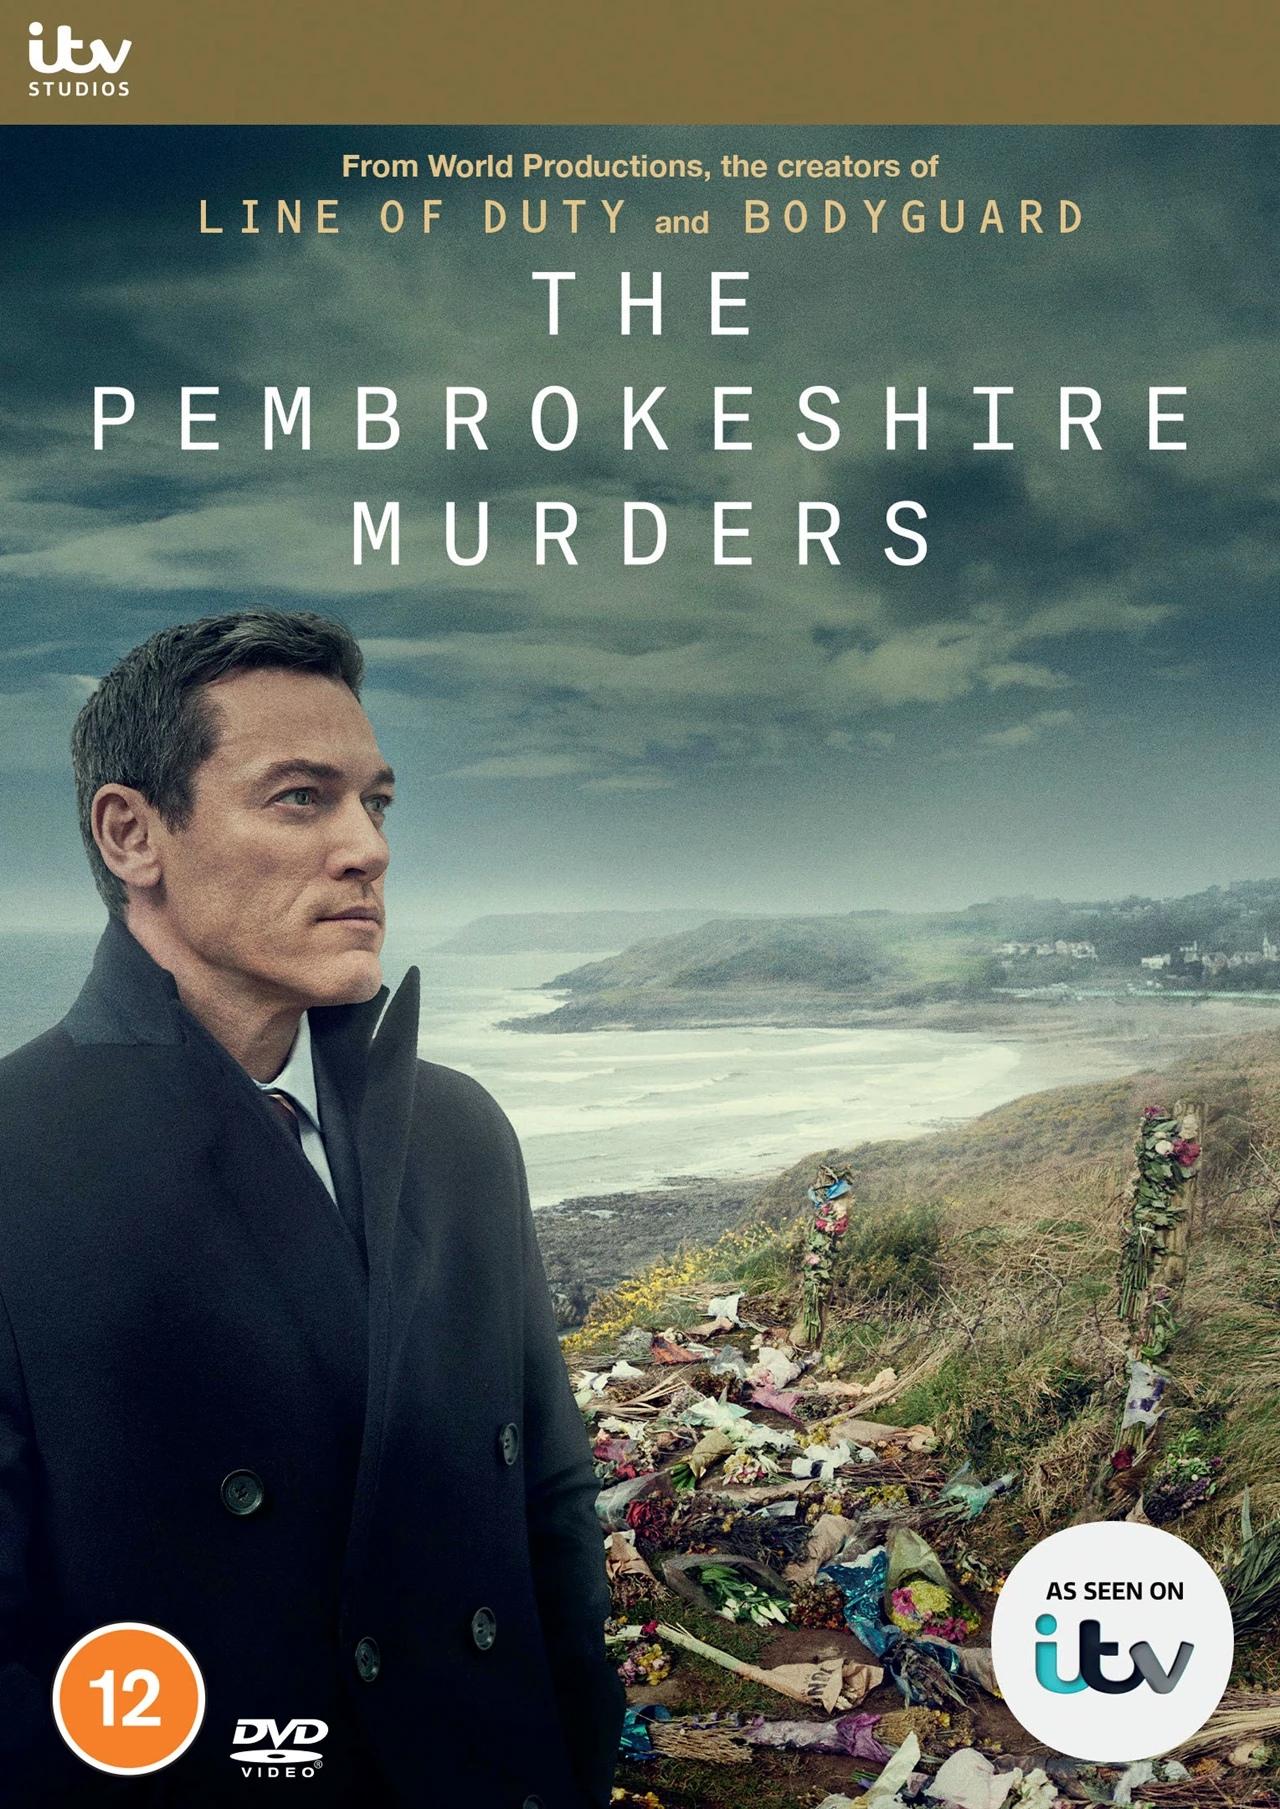    - The Pembrokeshire Murders